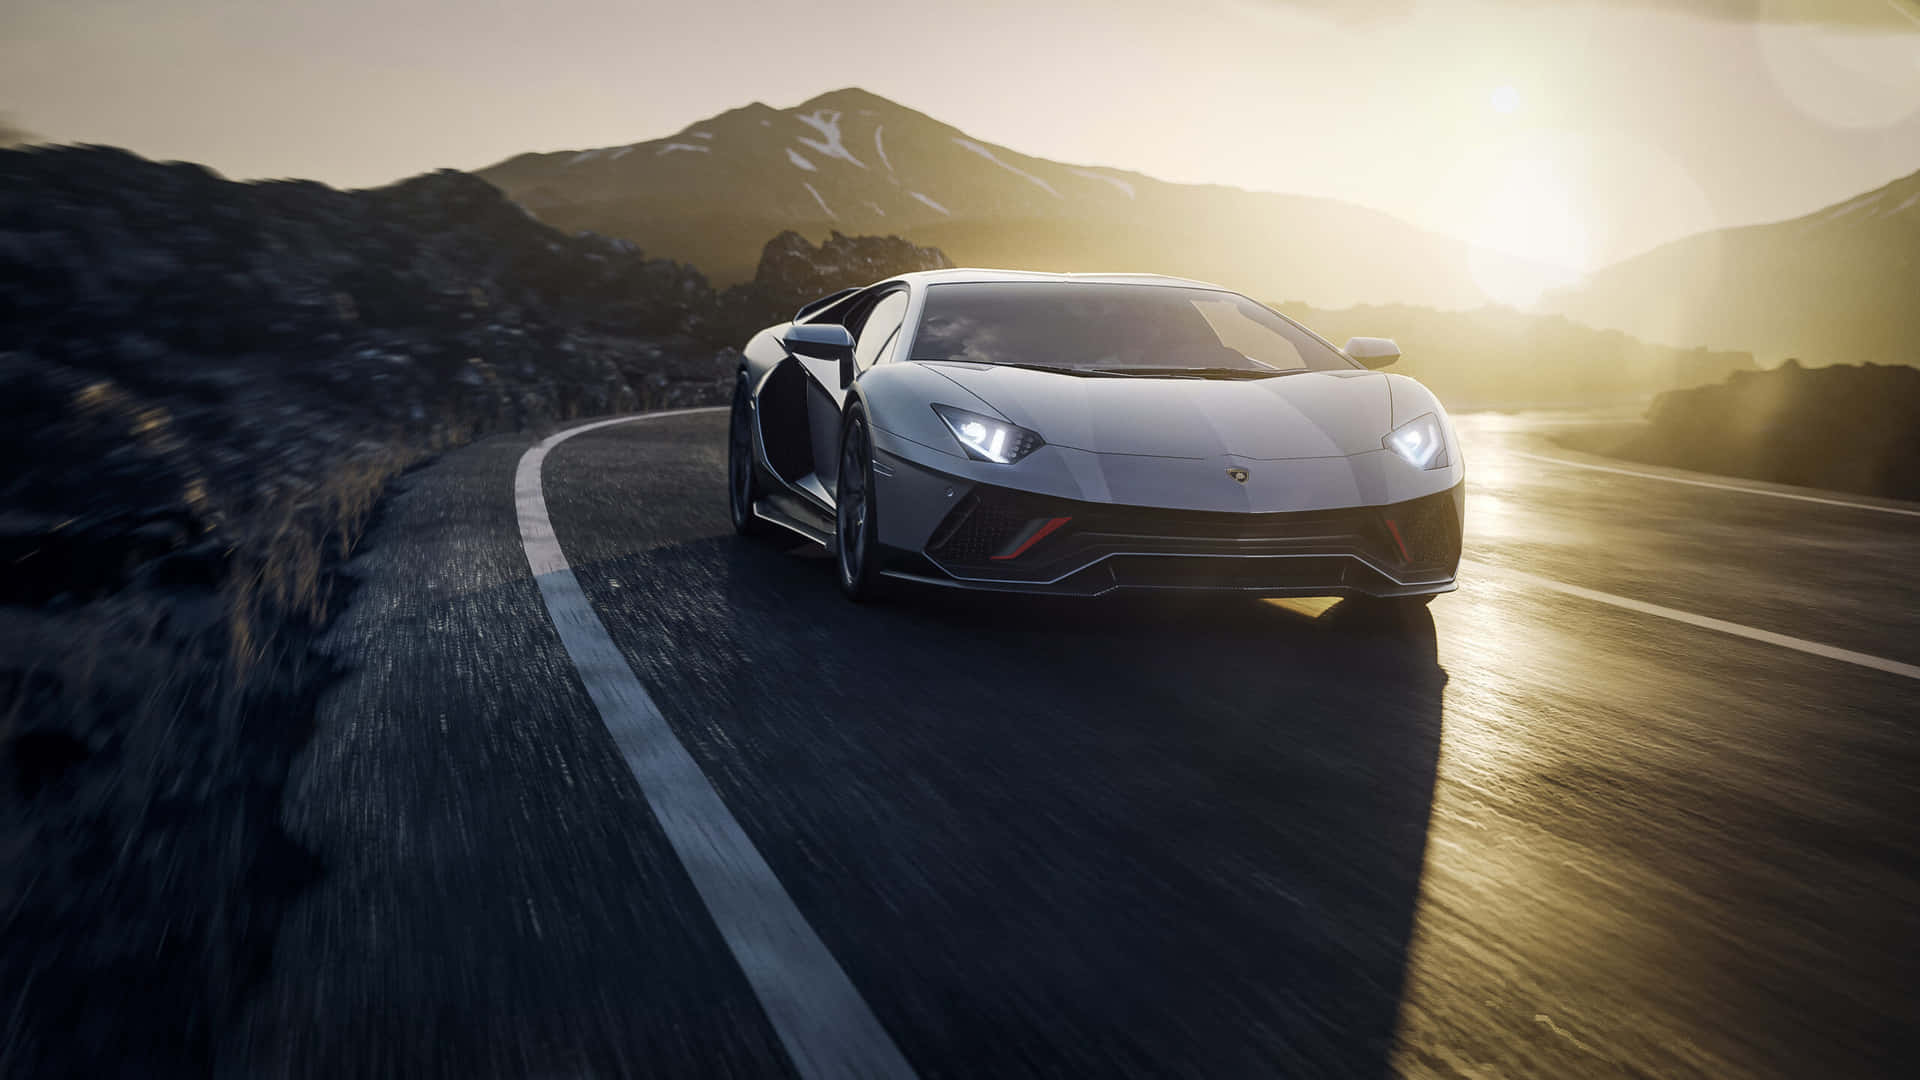 Elite Power - Lamborghini Aventador In High Resolution Wallpaper